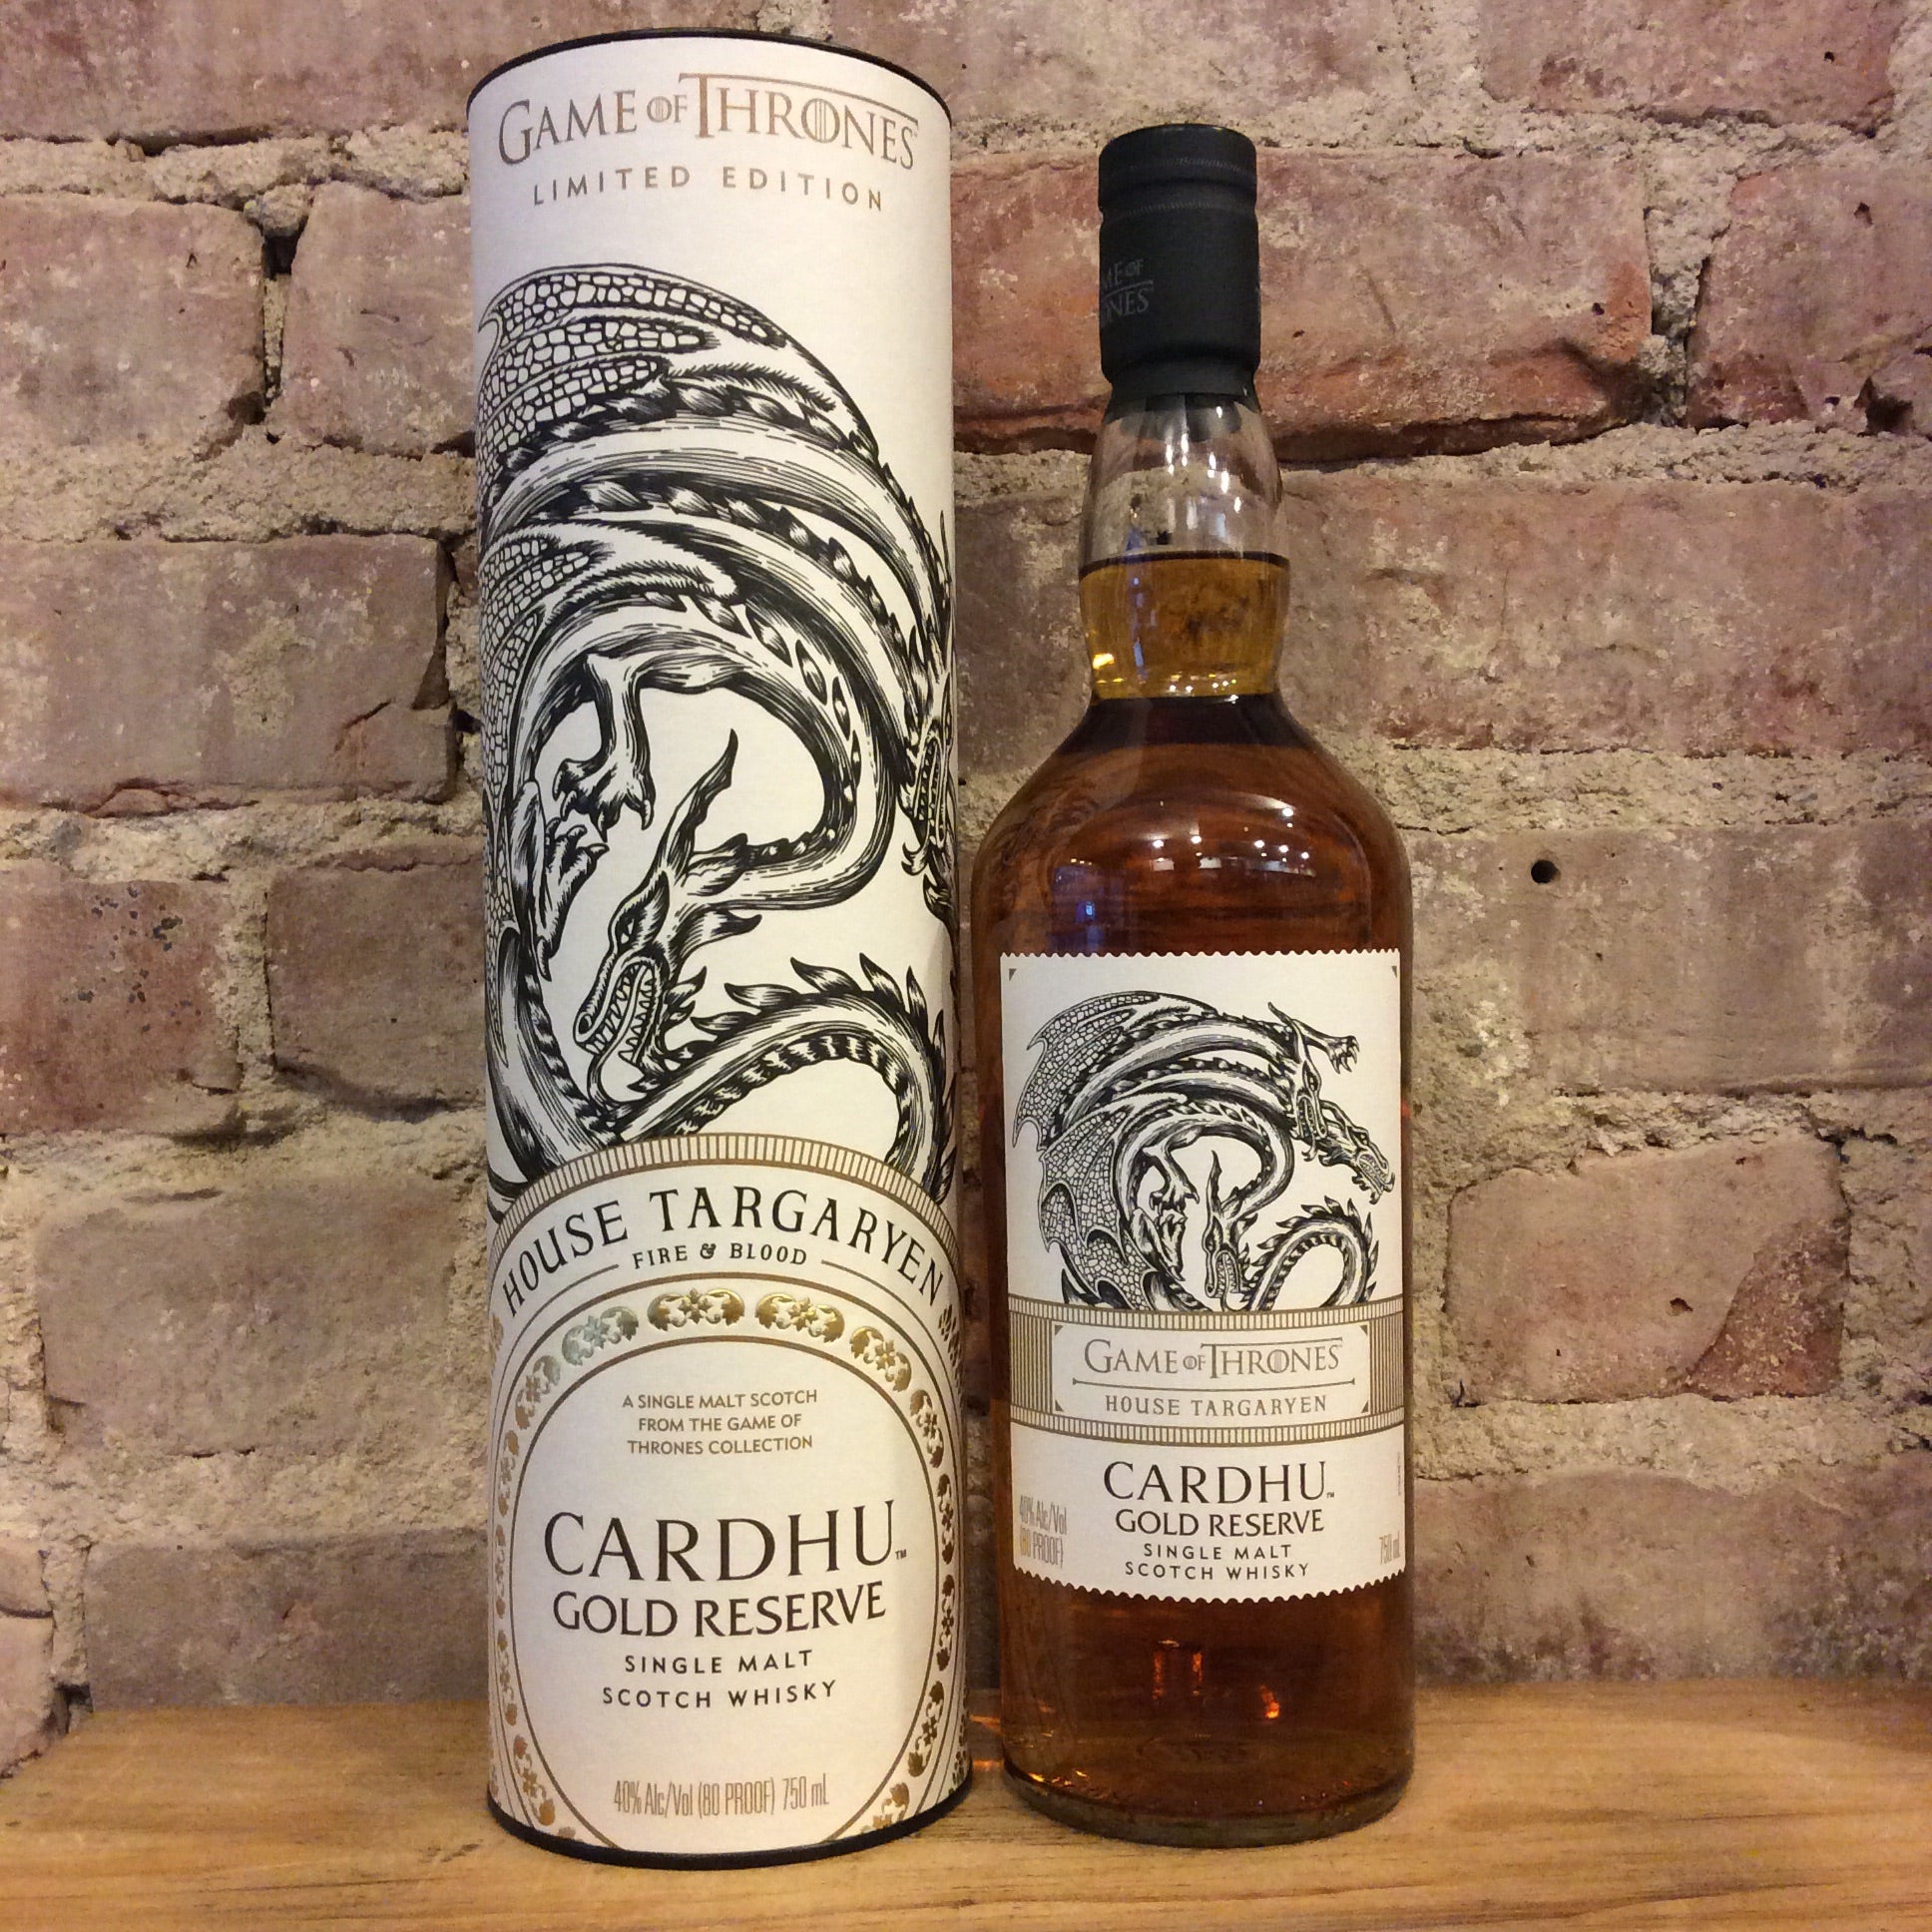 Cardhu Amber Rock - Scotch Whisky